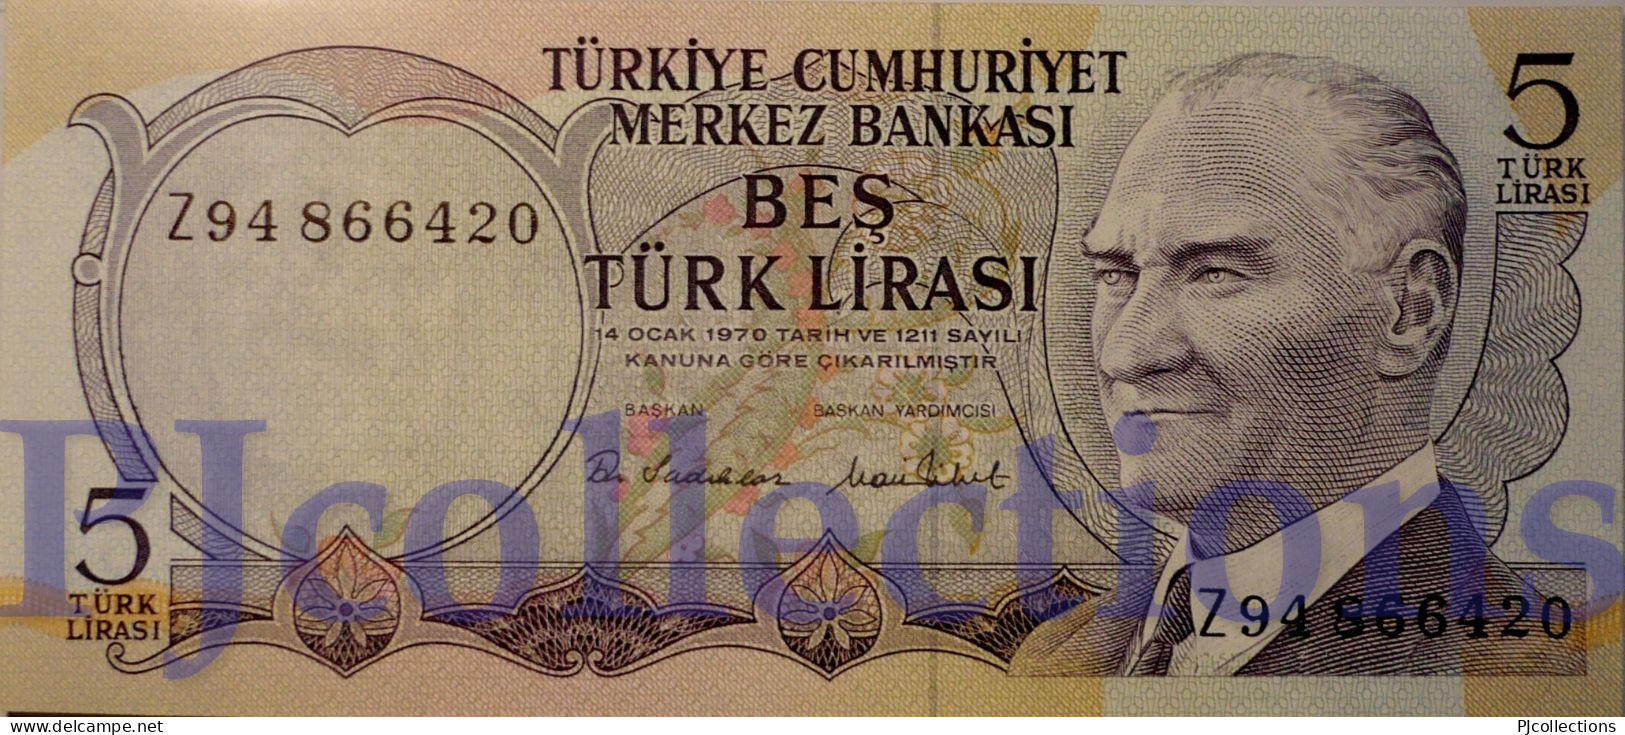 TURKEY 5 LIRA 1976 PICK 185 UNC PREFIX "Z94" REPLACEMENT - Turquie